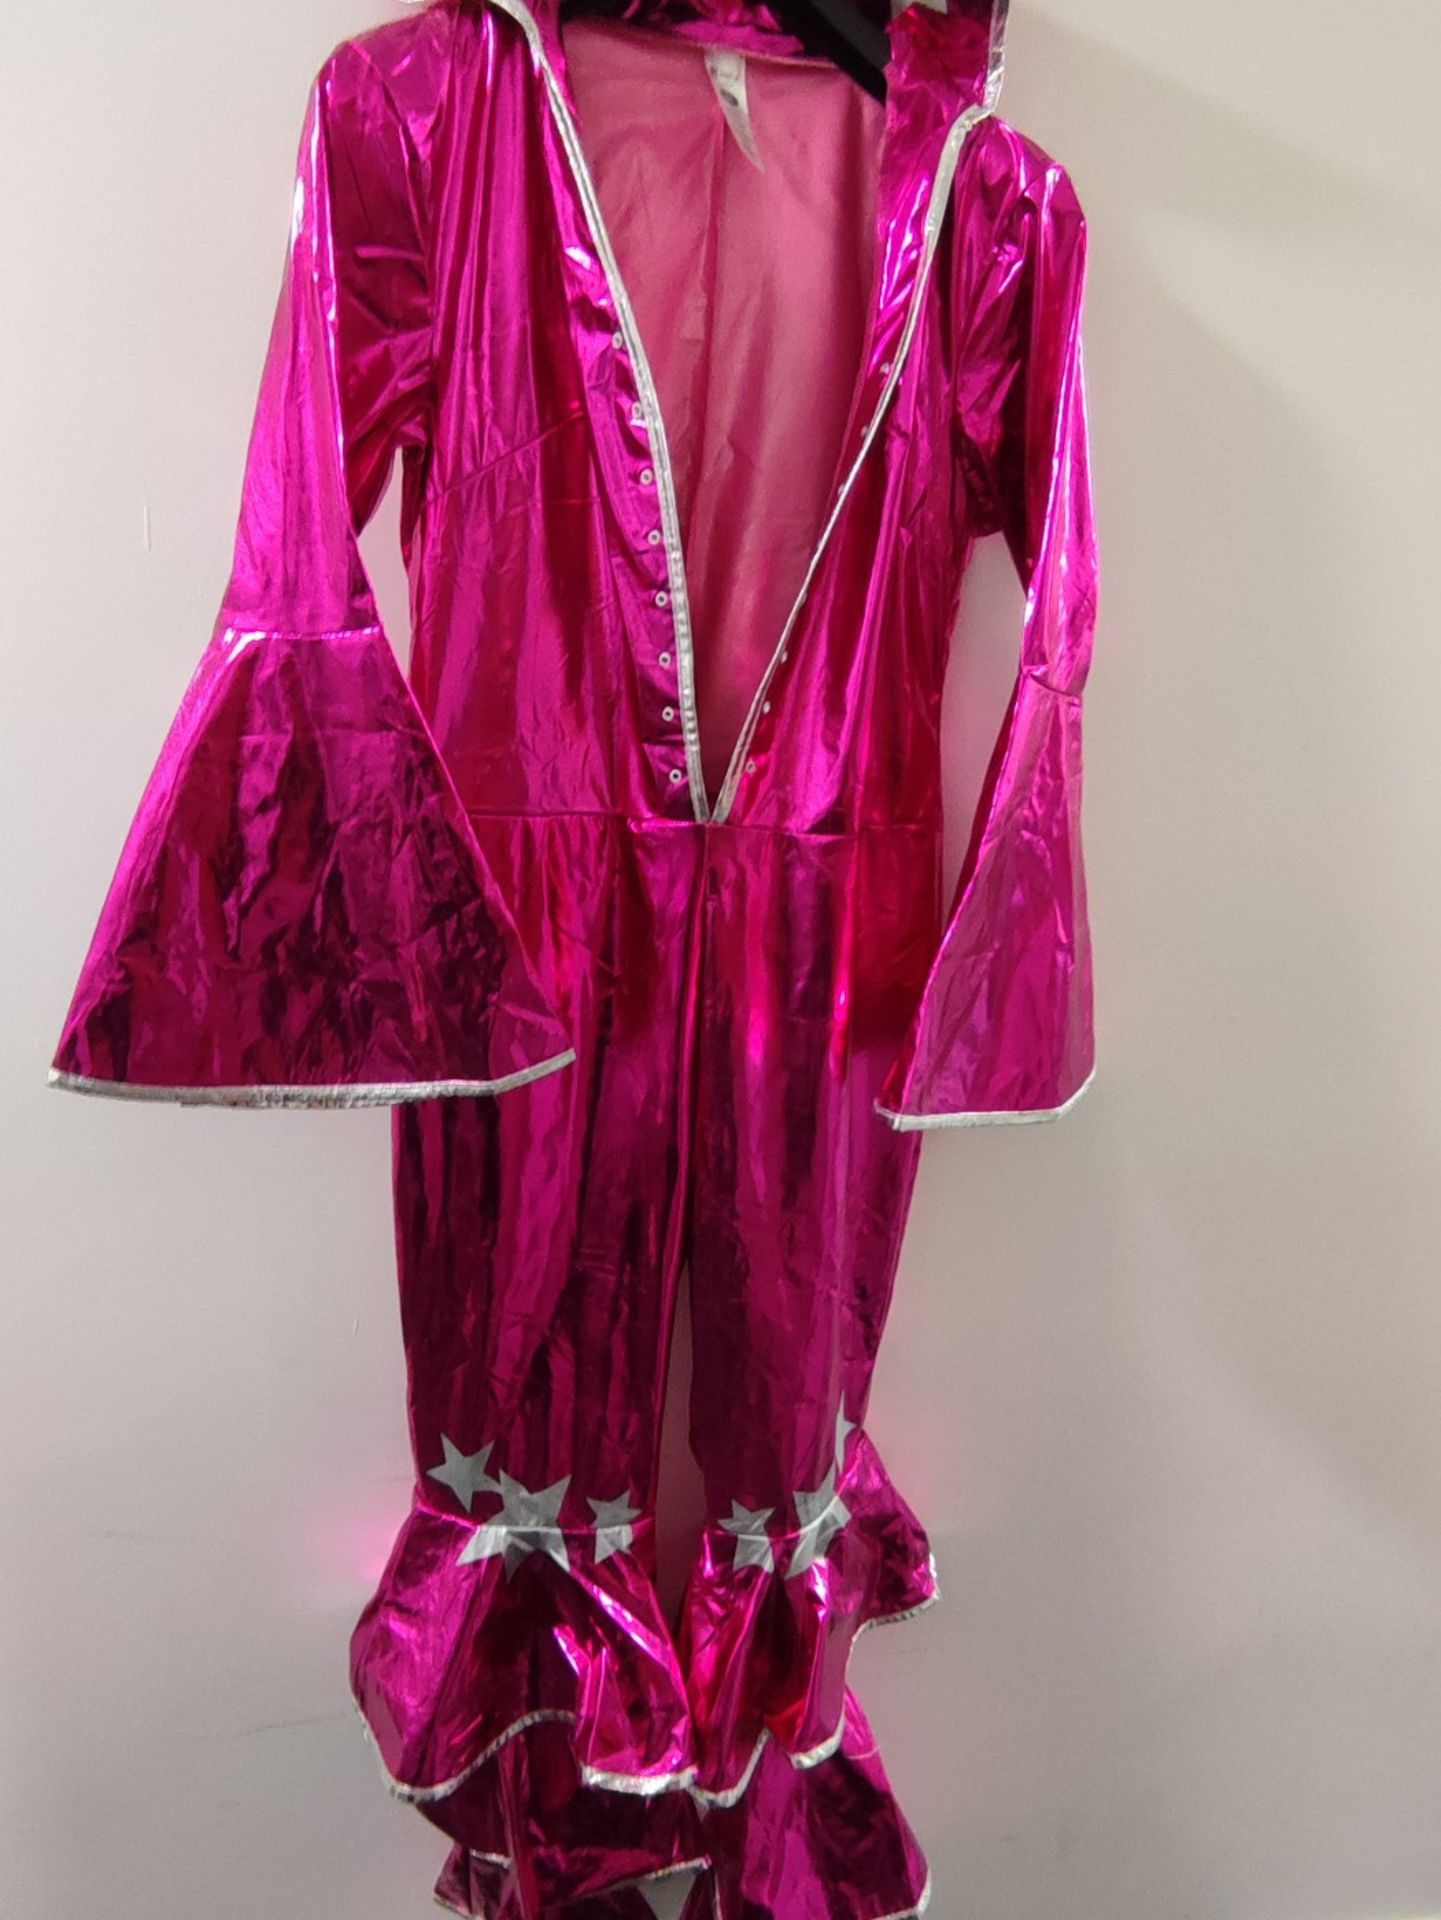 Smiffys 1970s Dancing Dream Costume, Pink, M - UK Size 12-14